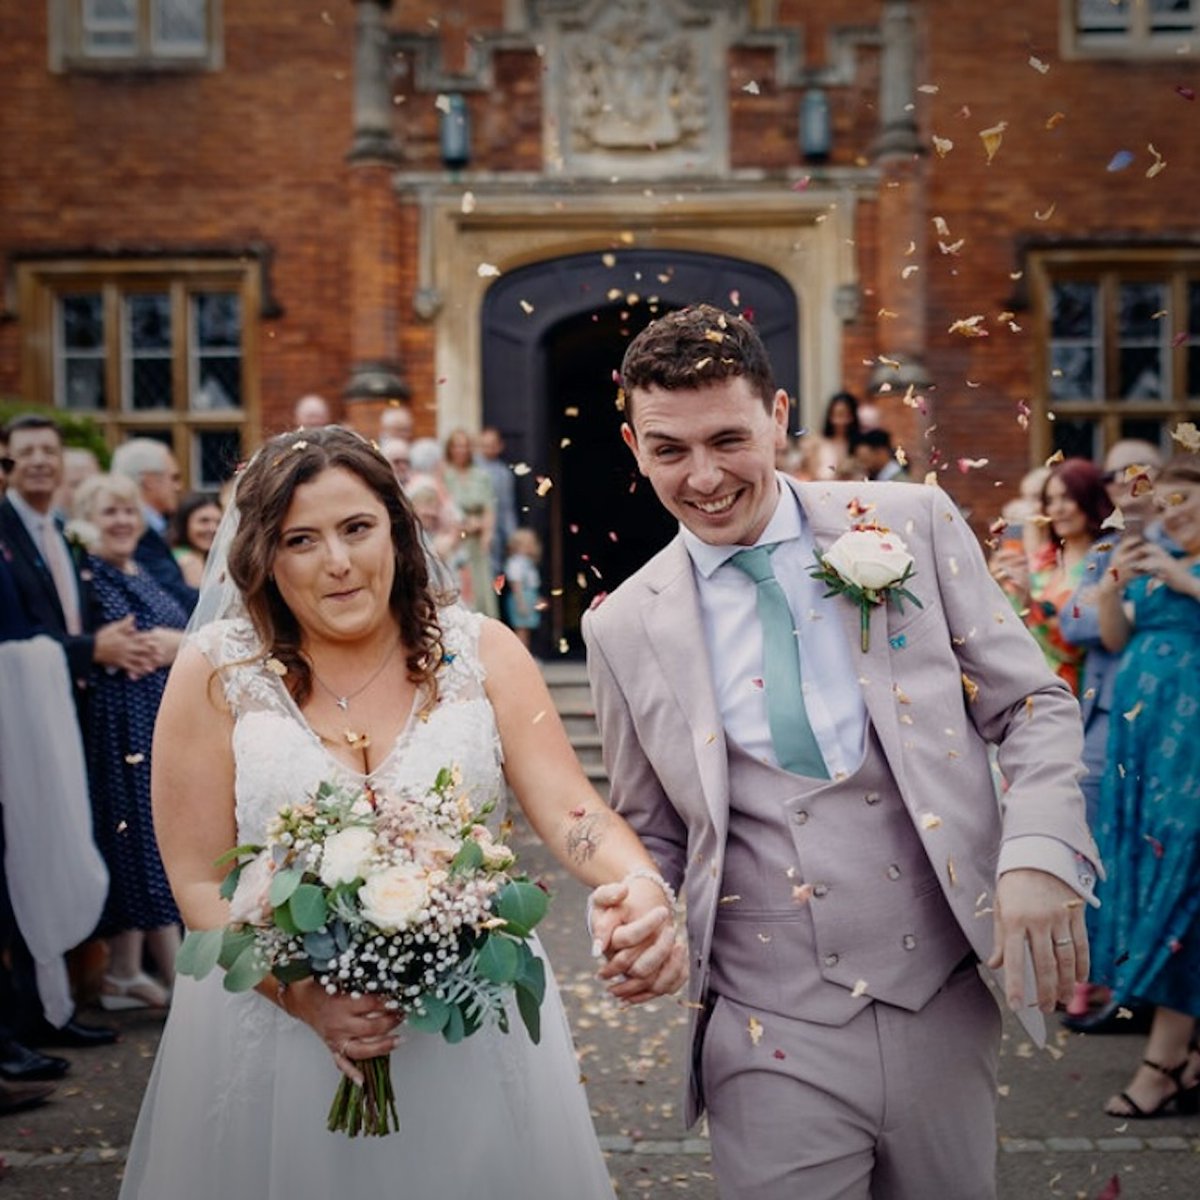 We did it! 💍
#WeddingCeremony #CeremonyFlowers #WeddingFlowers #WeddingFlorist #DeVereLatimerEstate #Hertfordshire #HemelHempstead #MaplesFlowers